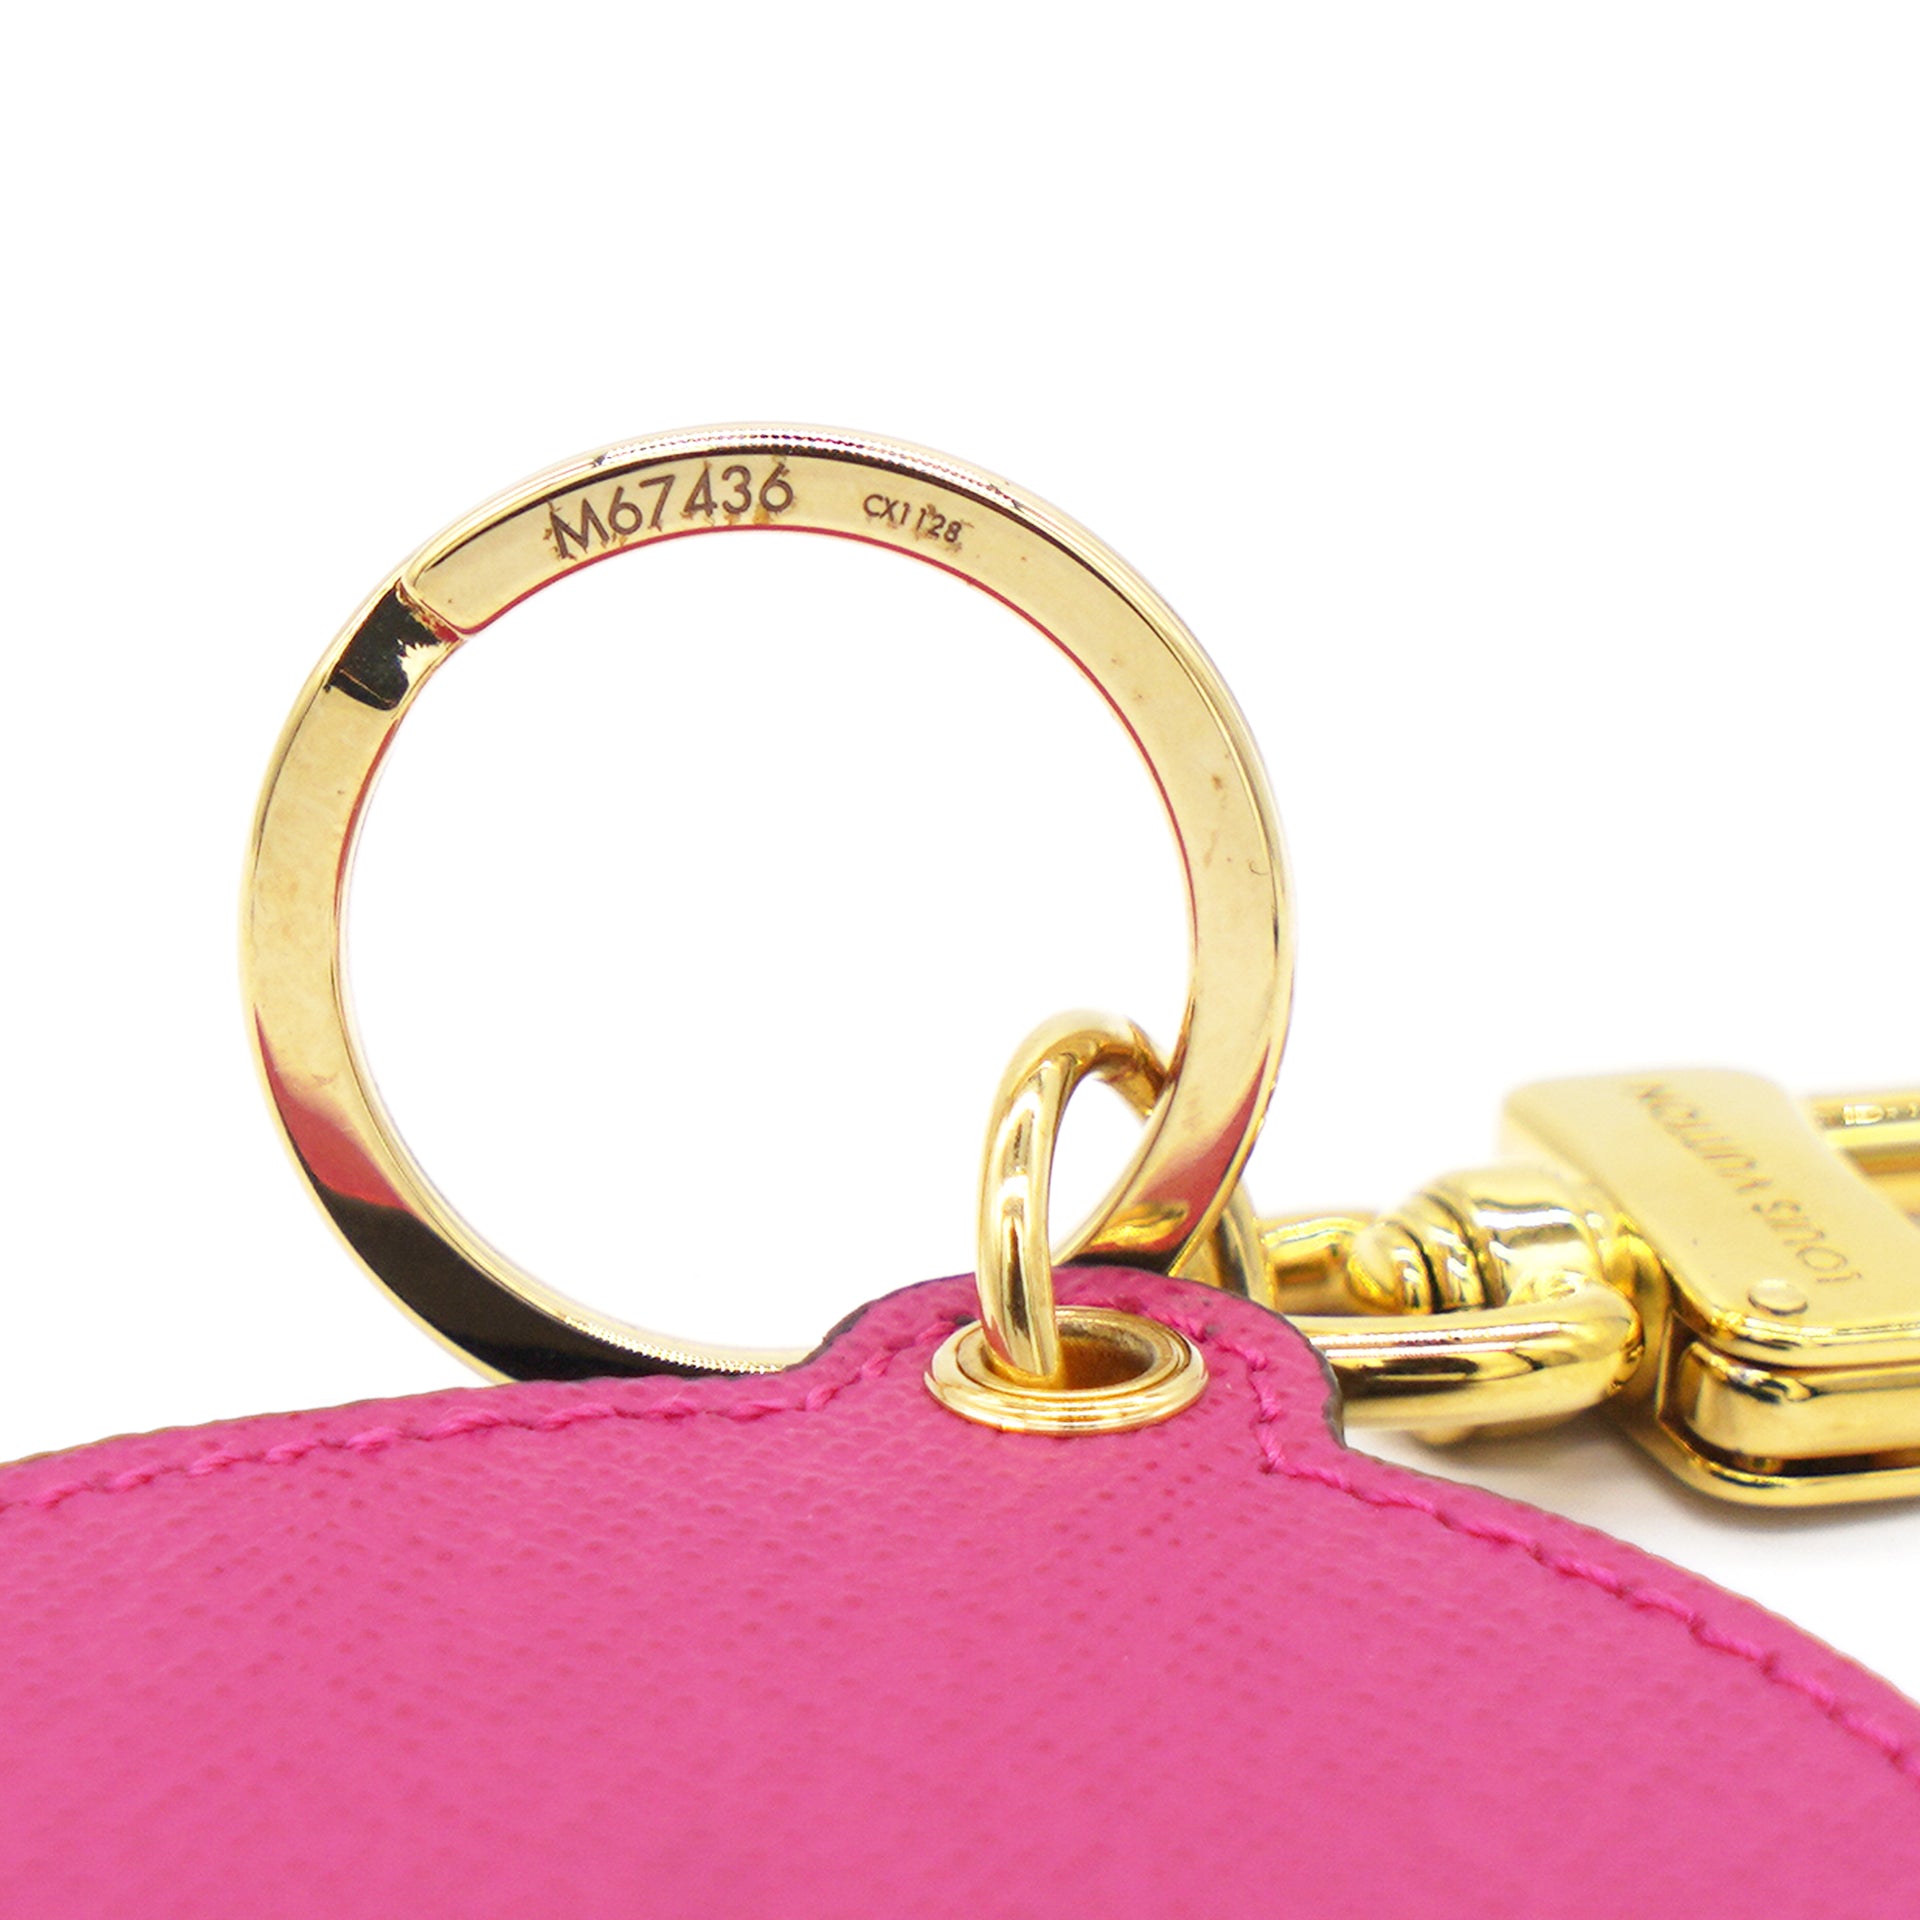 Louis Vuitton Monogram Love Lock Bag Charm Keyring – STYLISHTOP